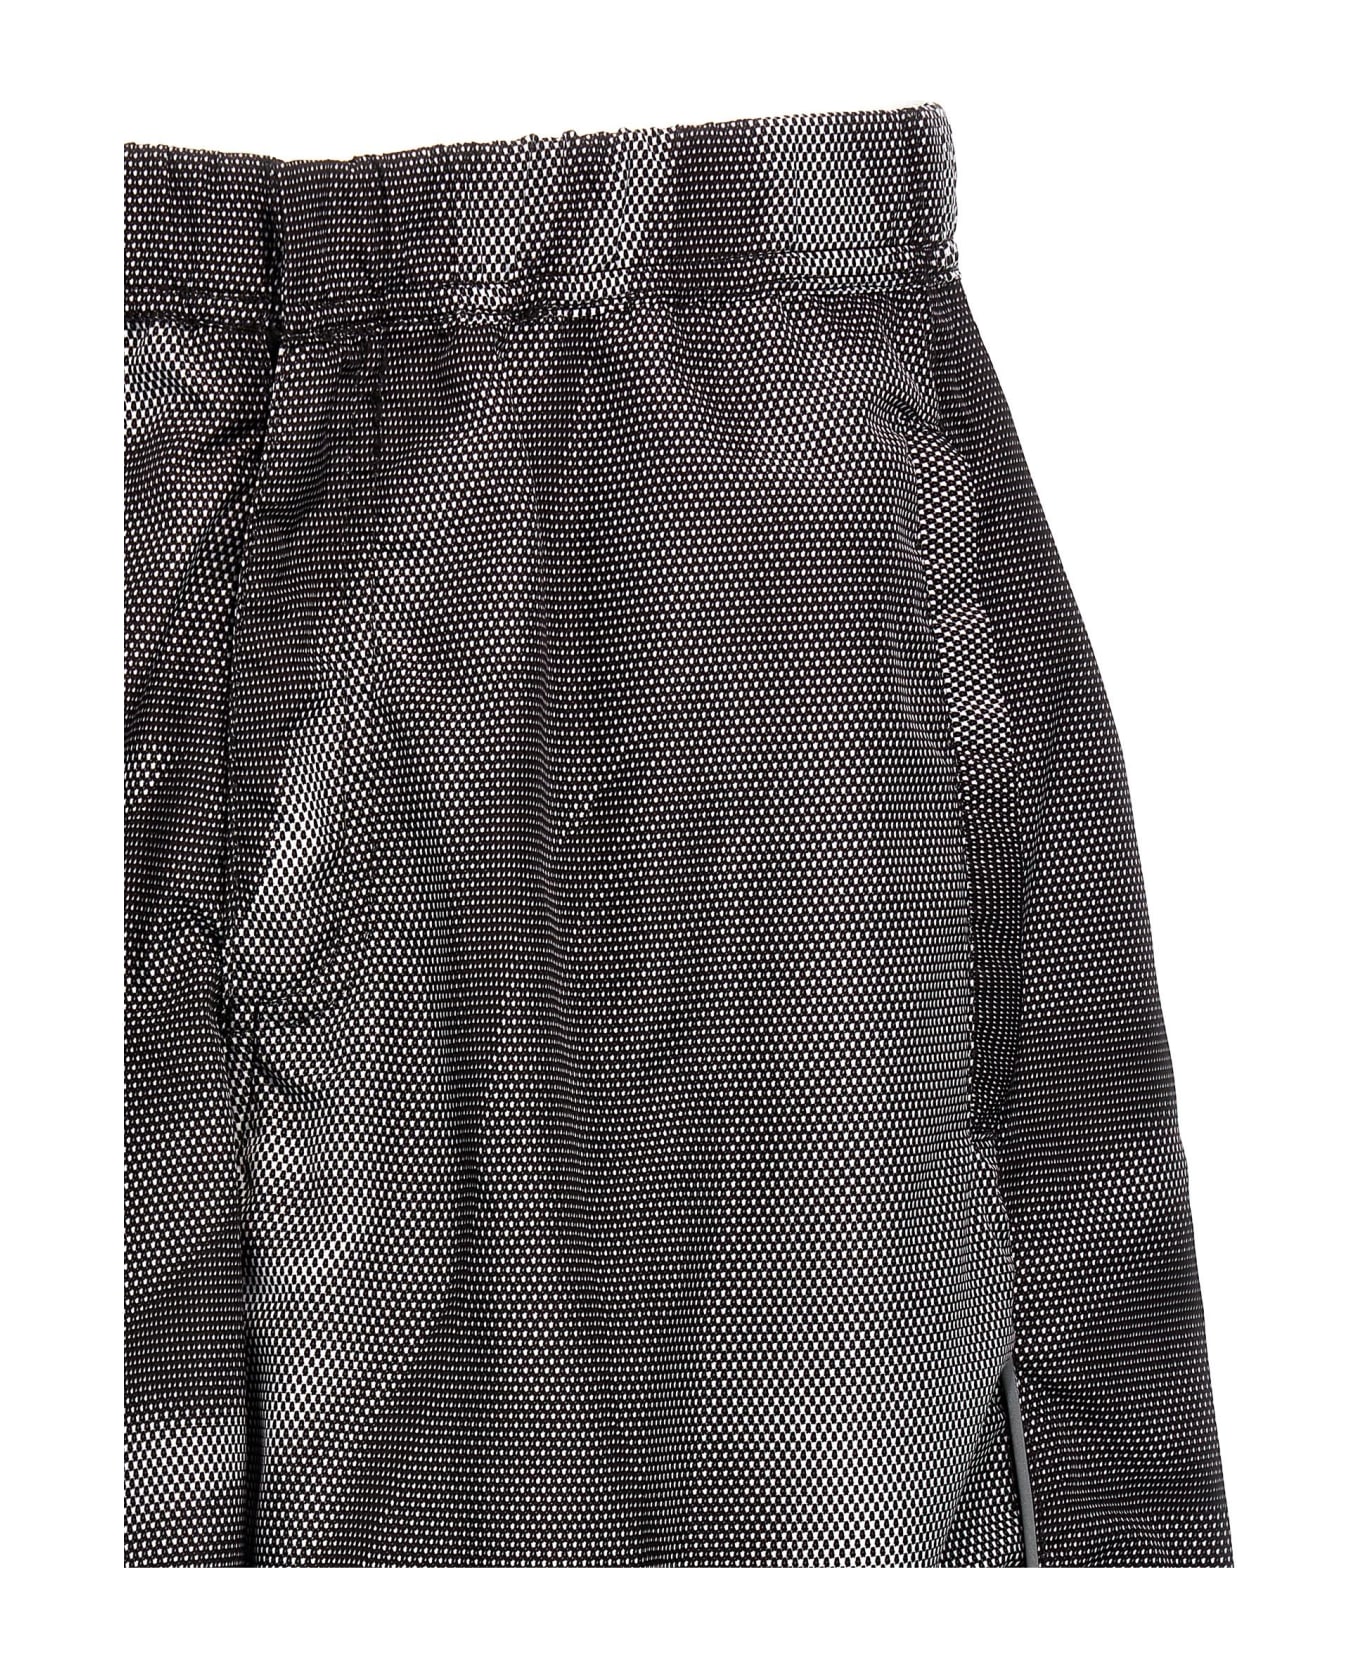 44 Label Group 'crinkle' Bermuda Shorts Shorts - BLACK